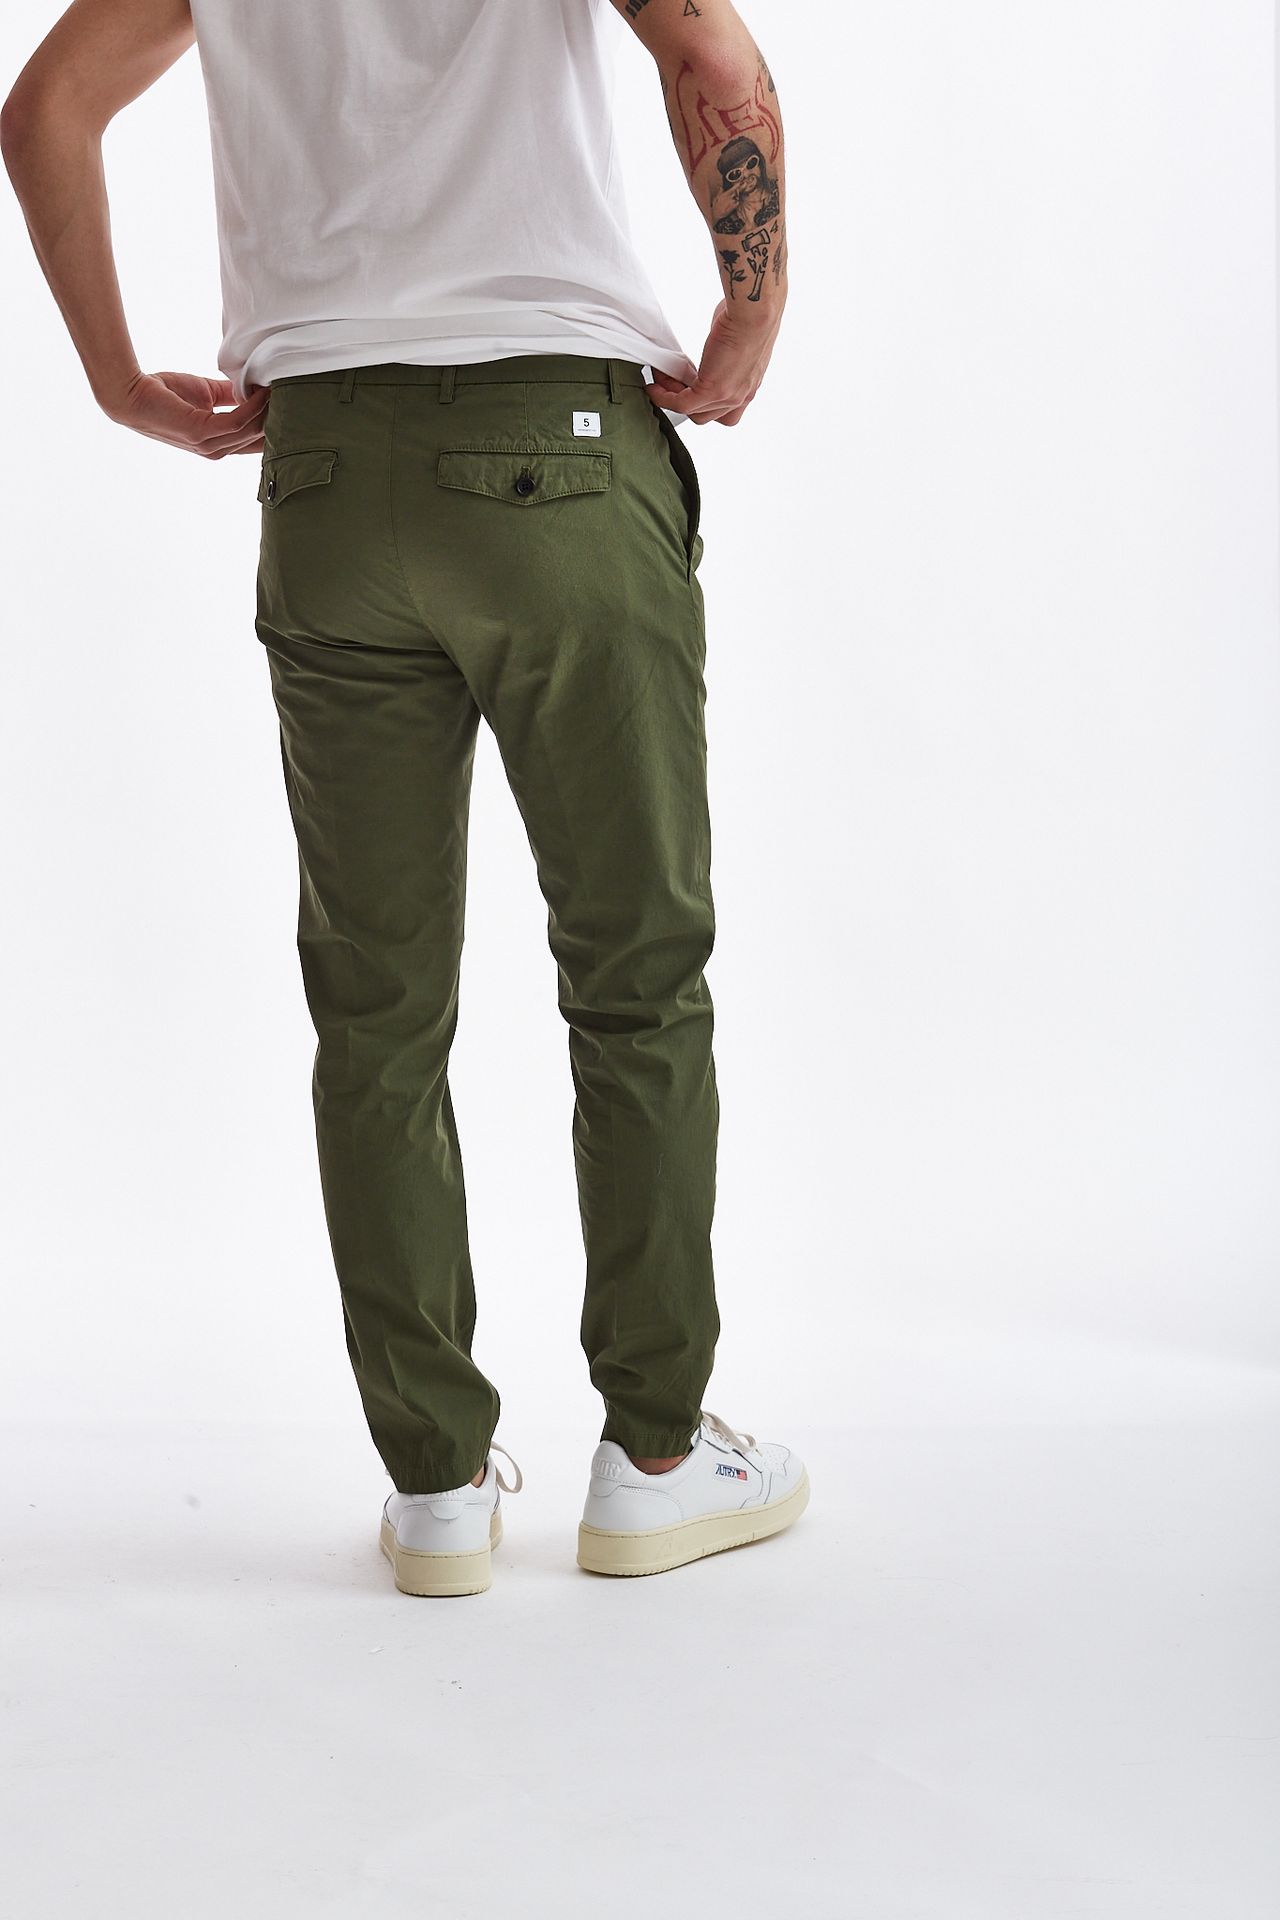 Pantalone PRINCE PENCES verde